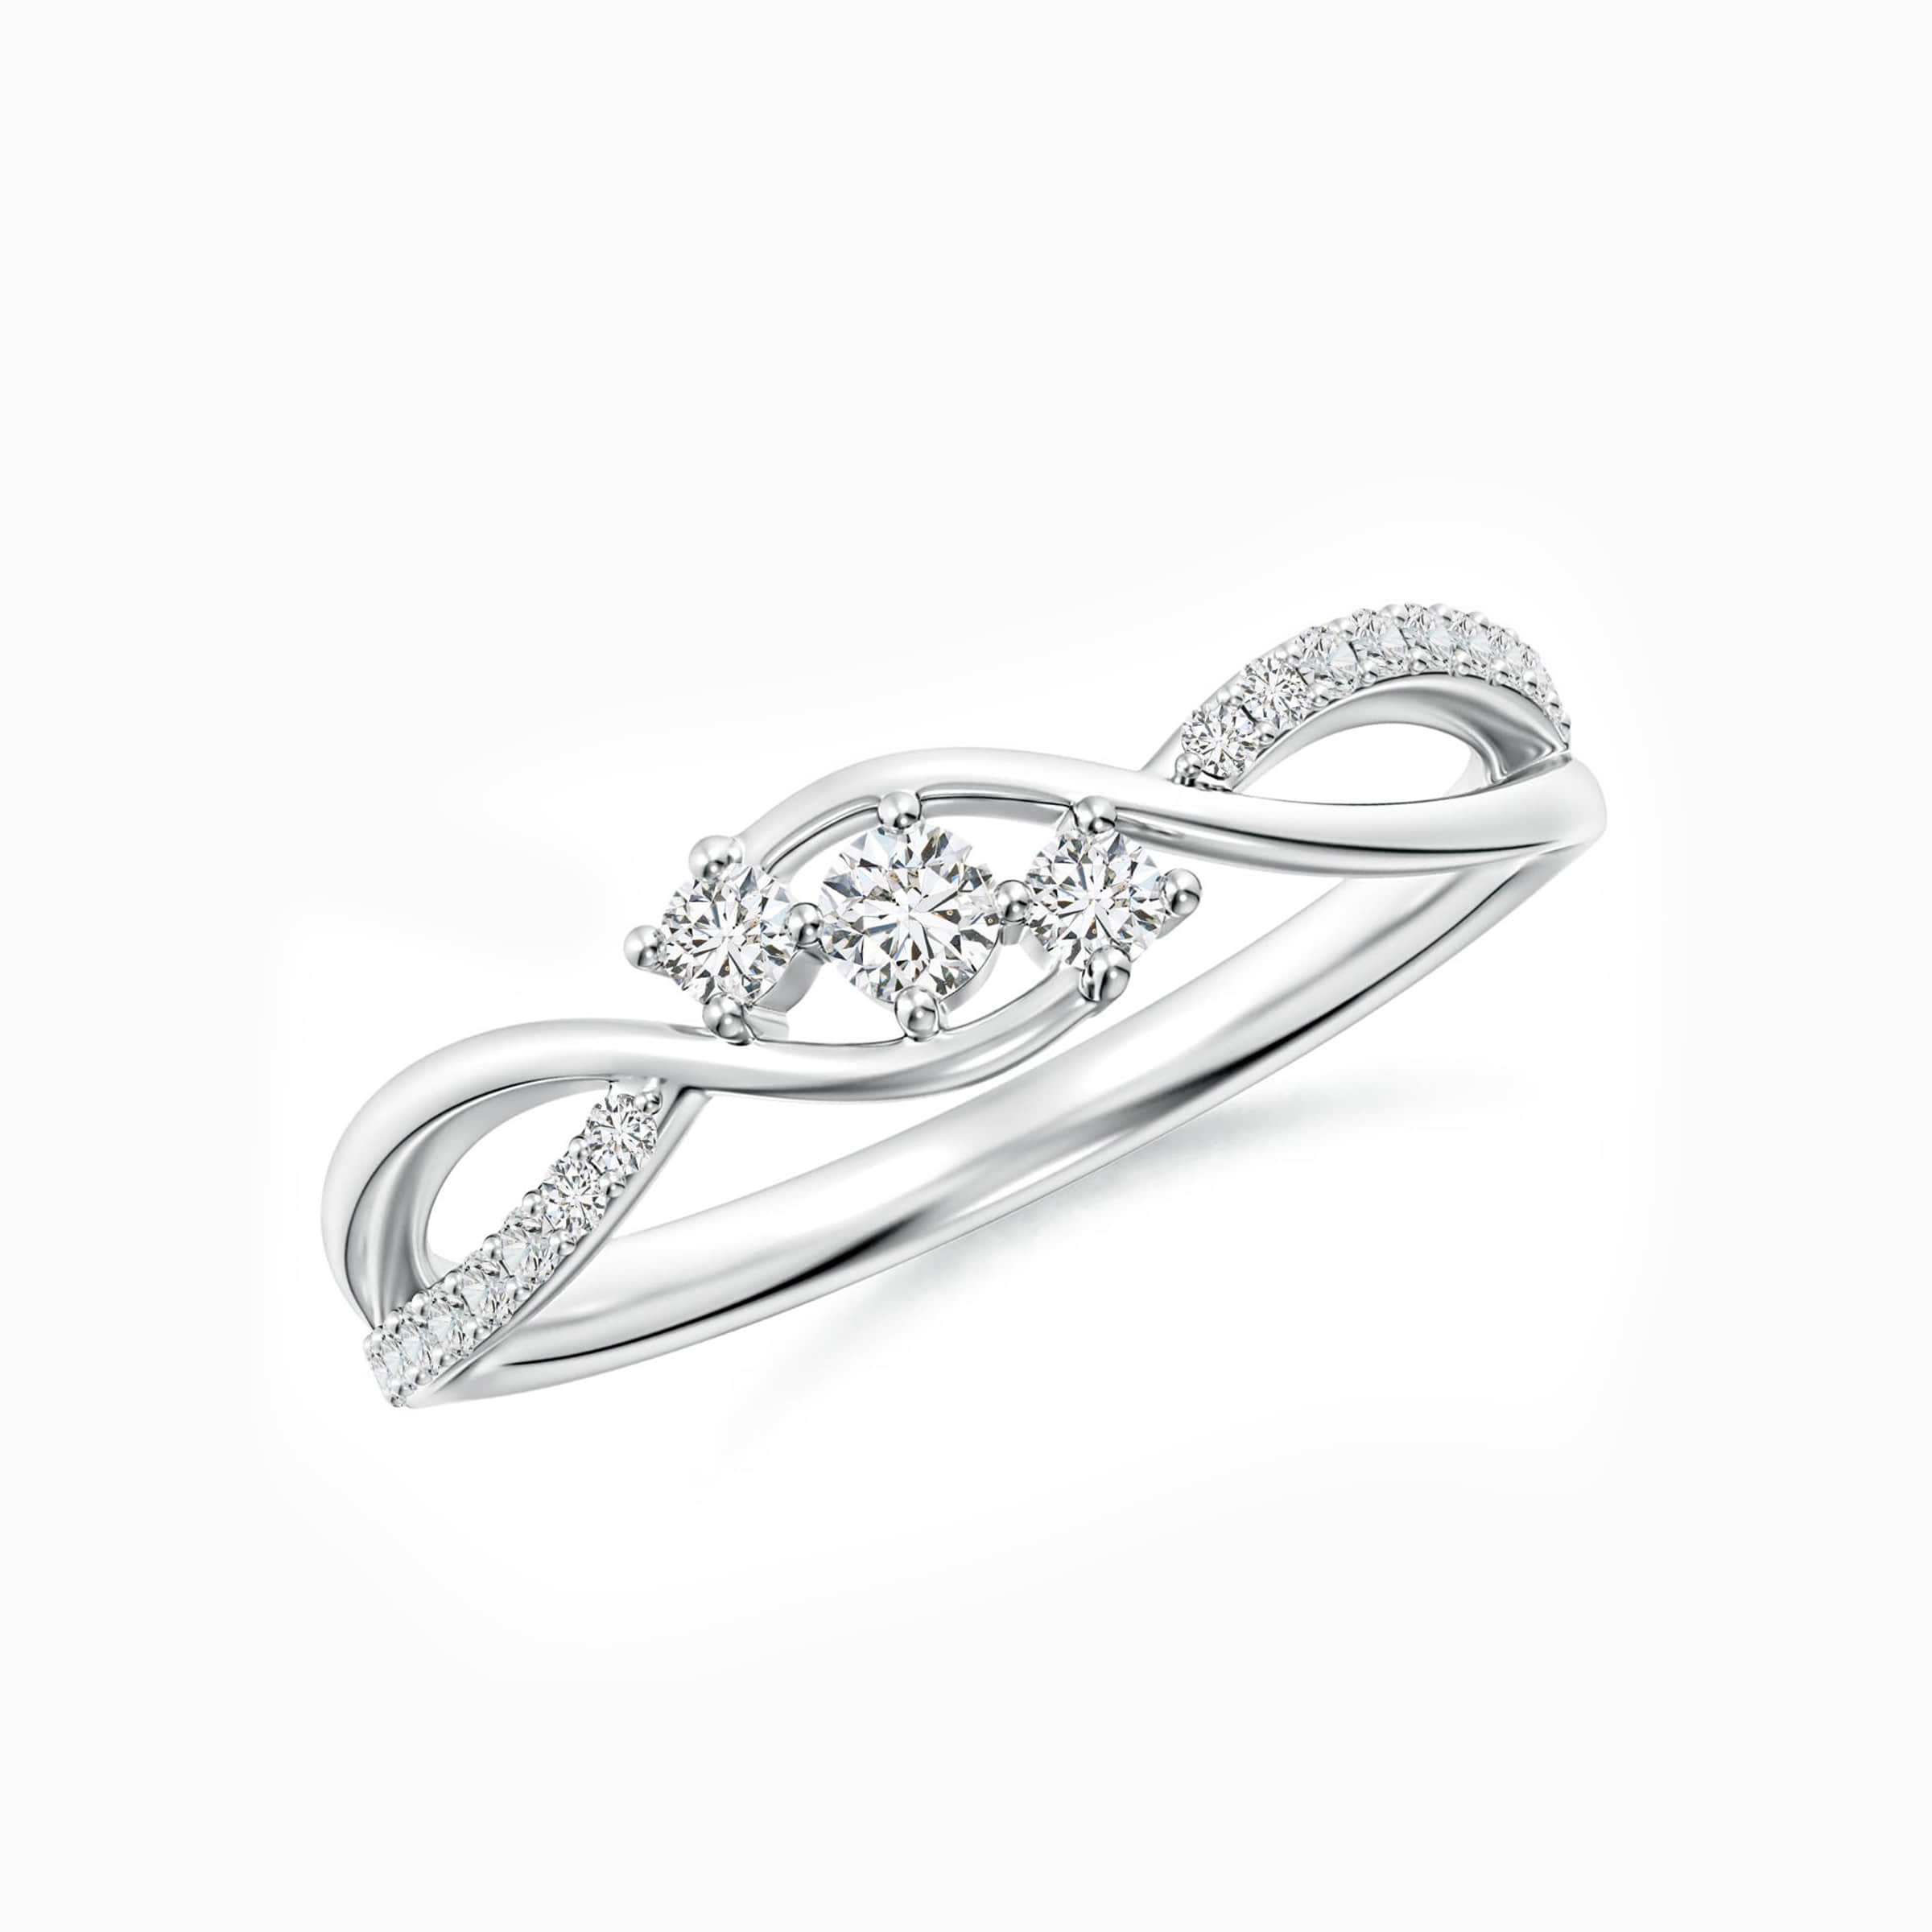 Darry Ring diamond promise ring for her in white gold